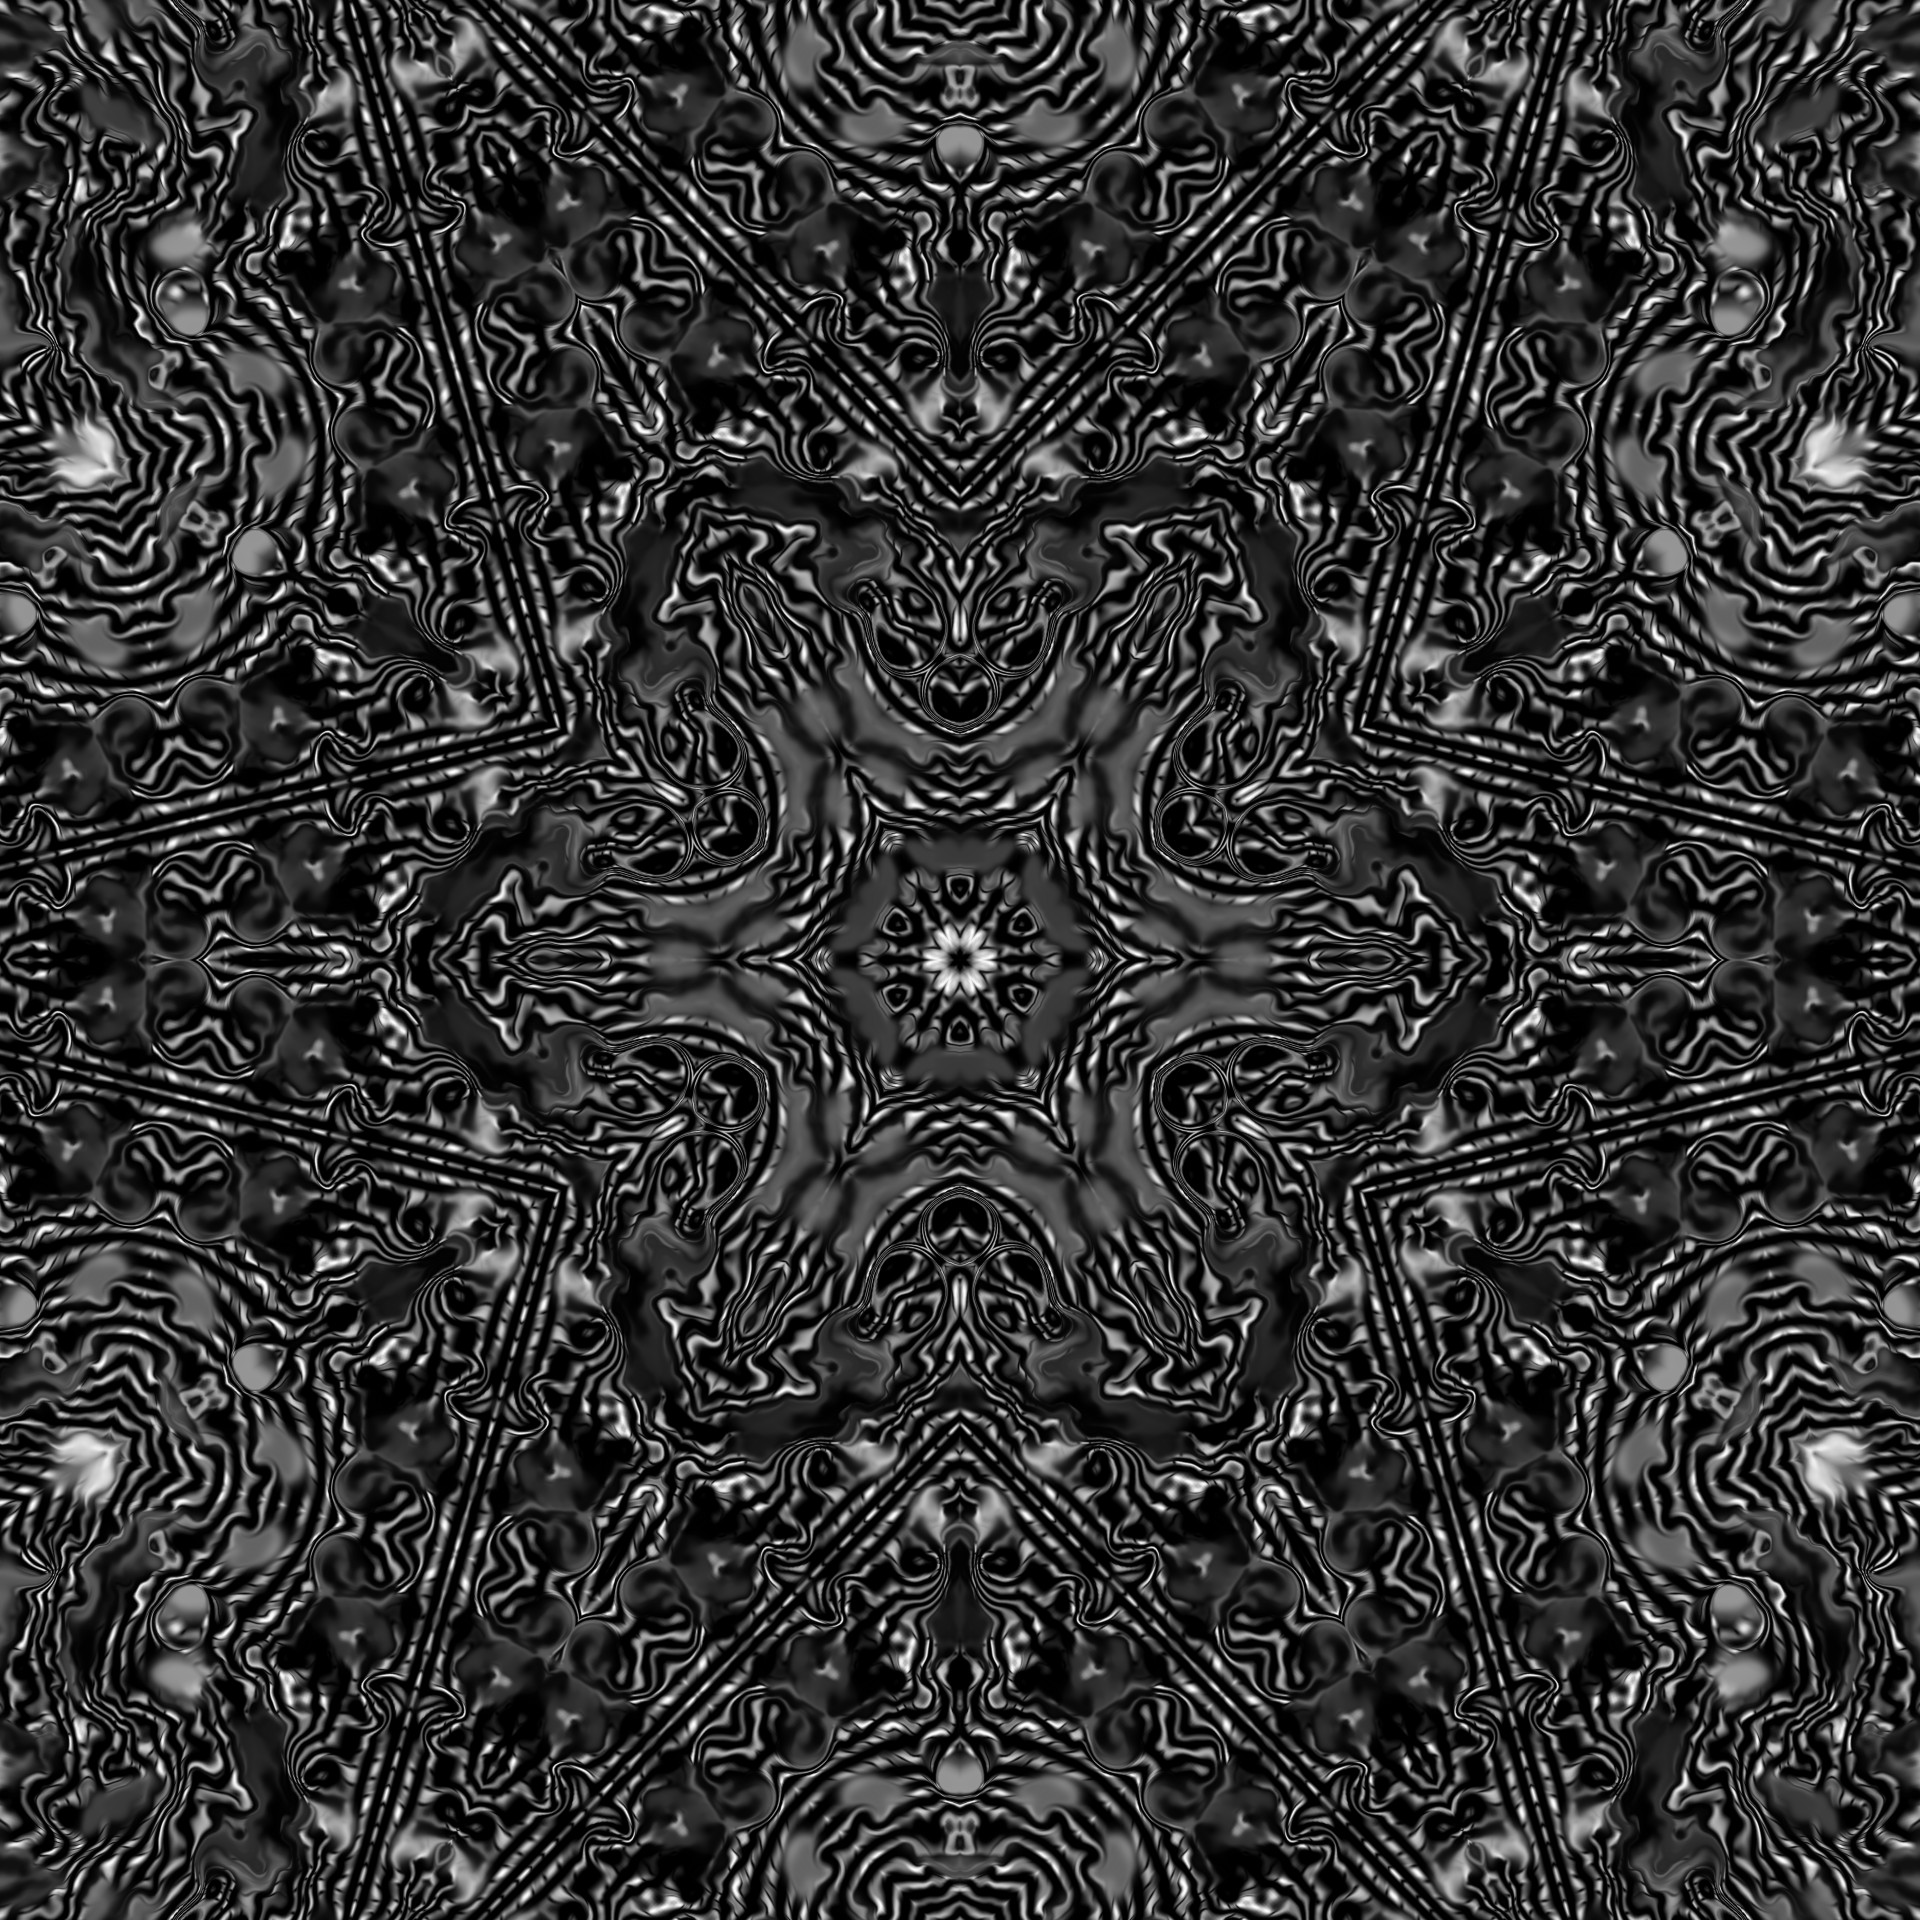 Black And White Kaleidoscope